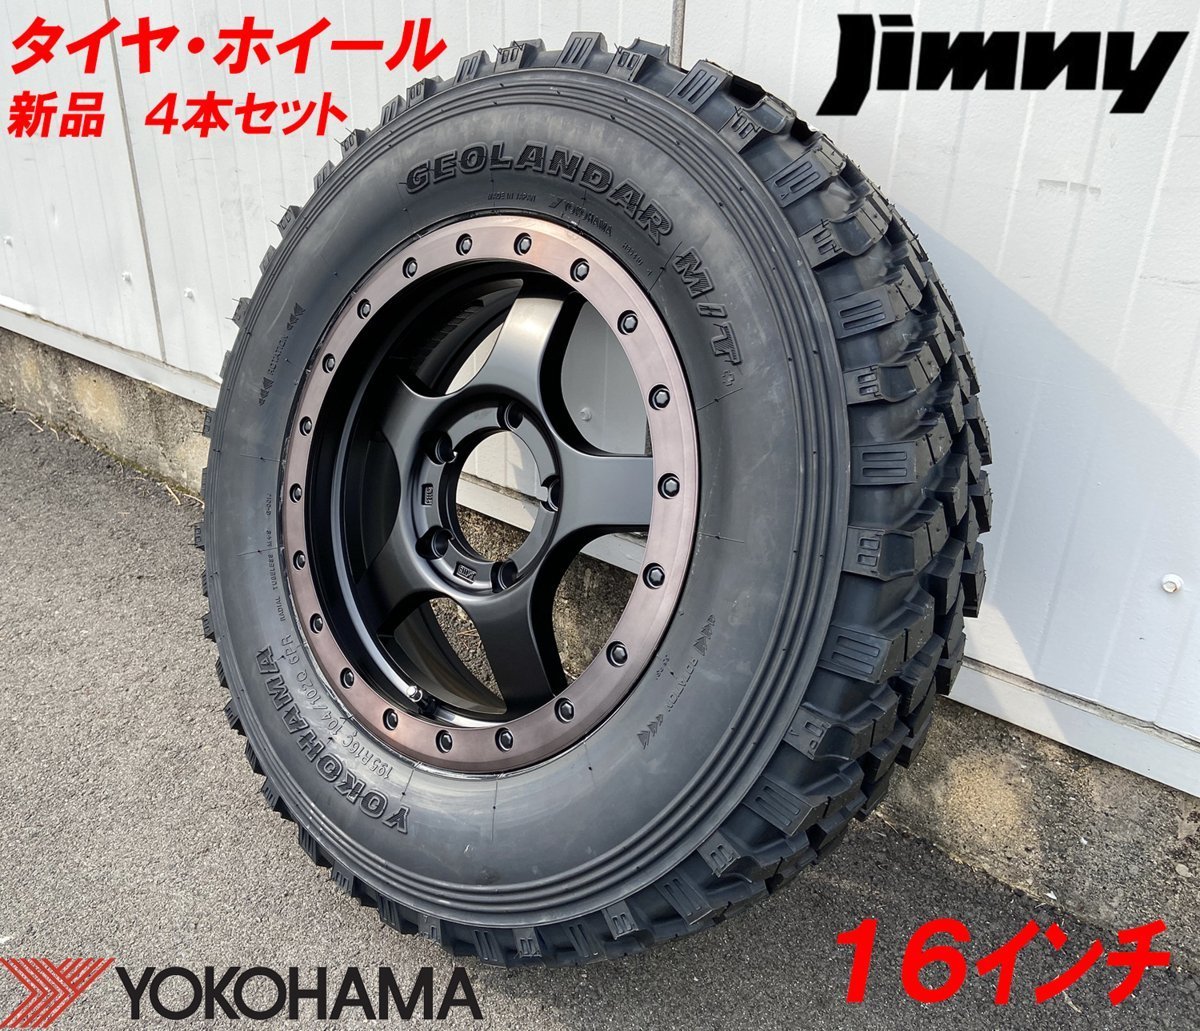 YOKOHAMA GEOLANDAR M/T+ ワイルドトラクション G001J 195R16 ジムニー 